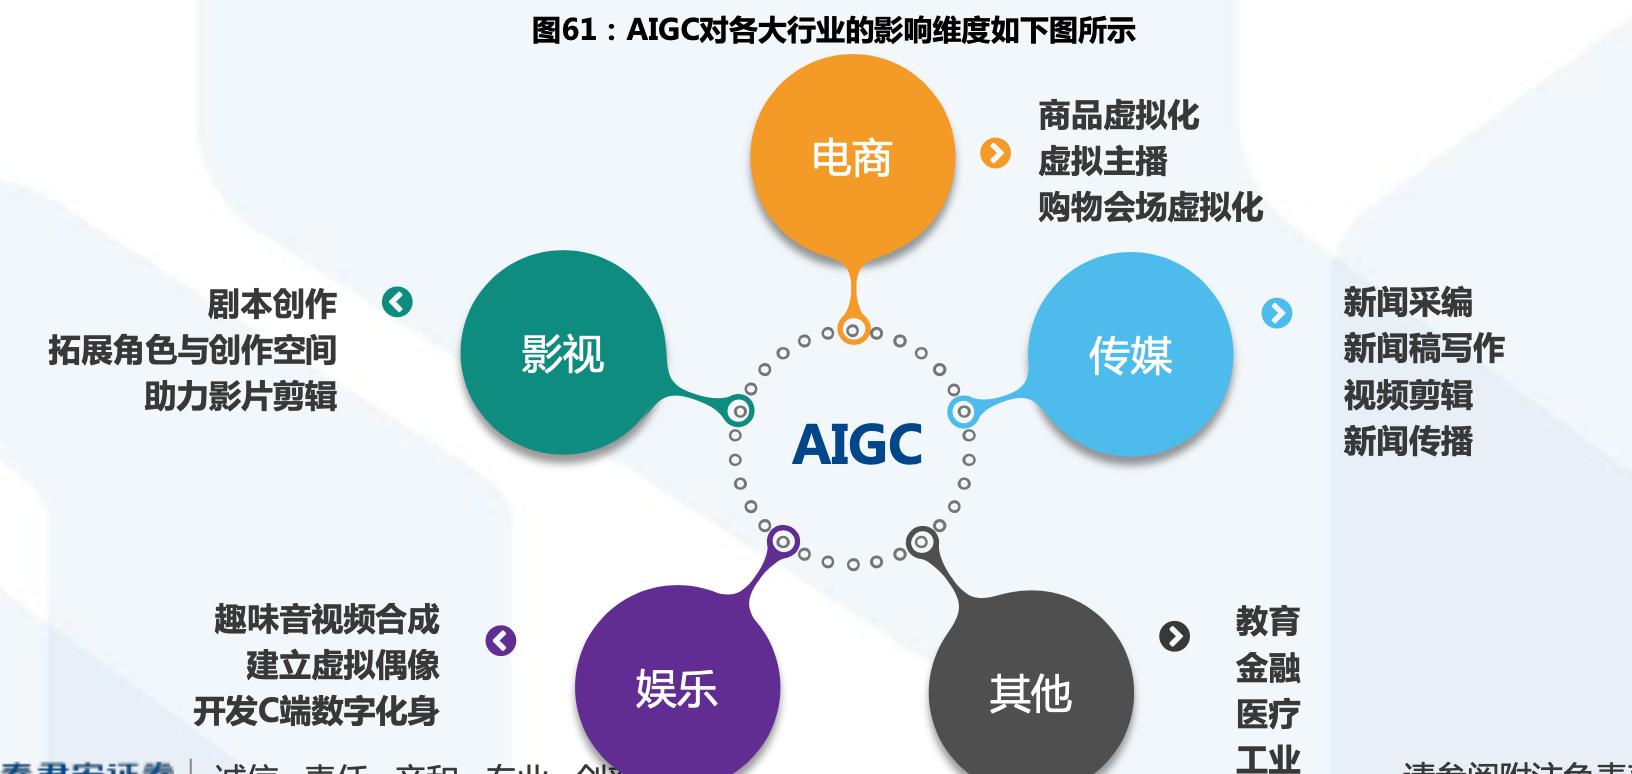 AIGC对各大行业的影响维度如图